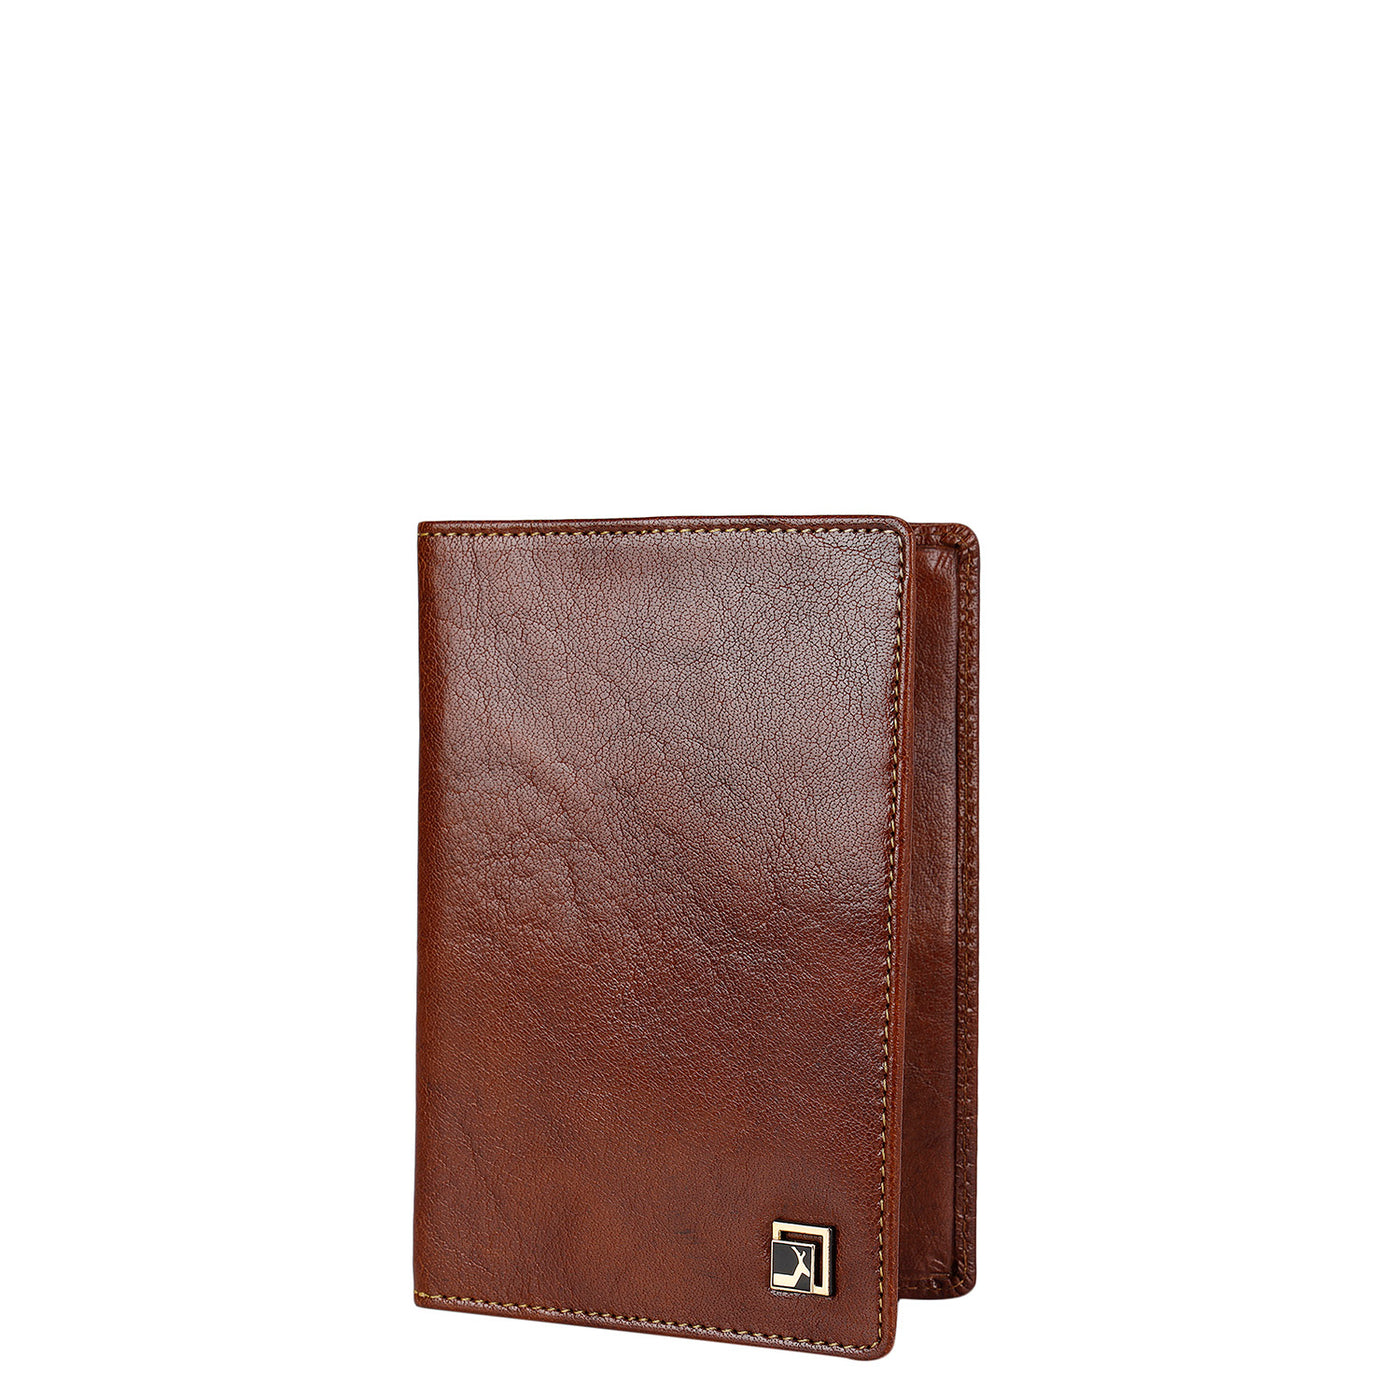 Elephant Pattern Leather Passport Case - Cognac